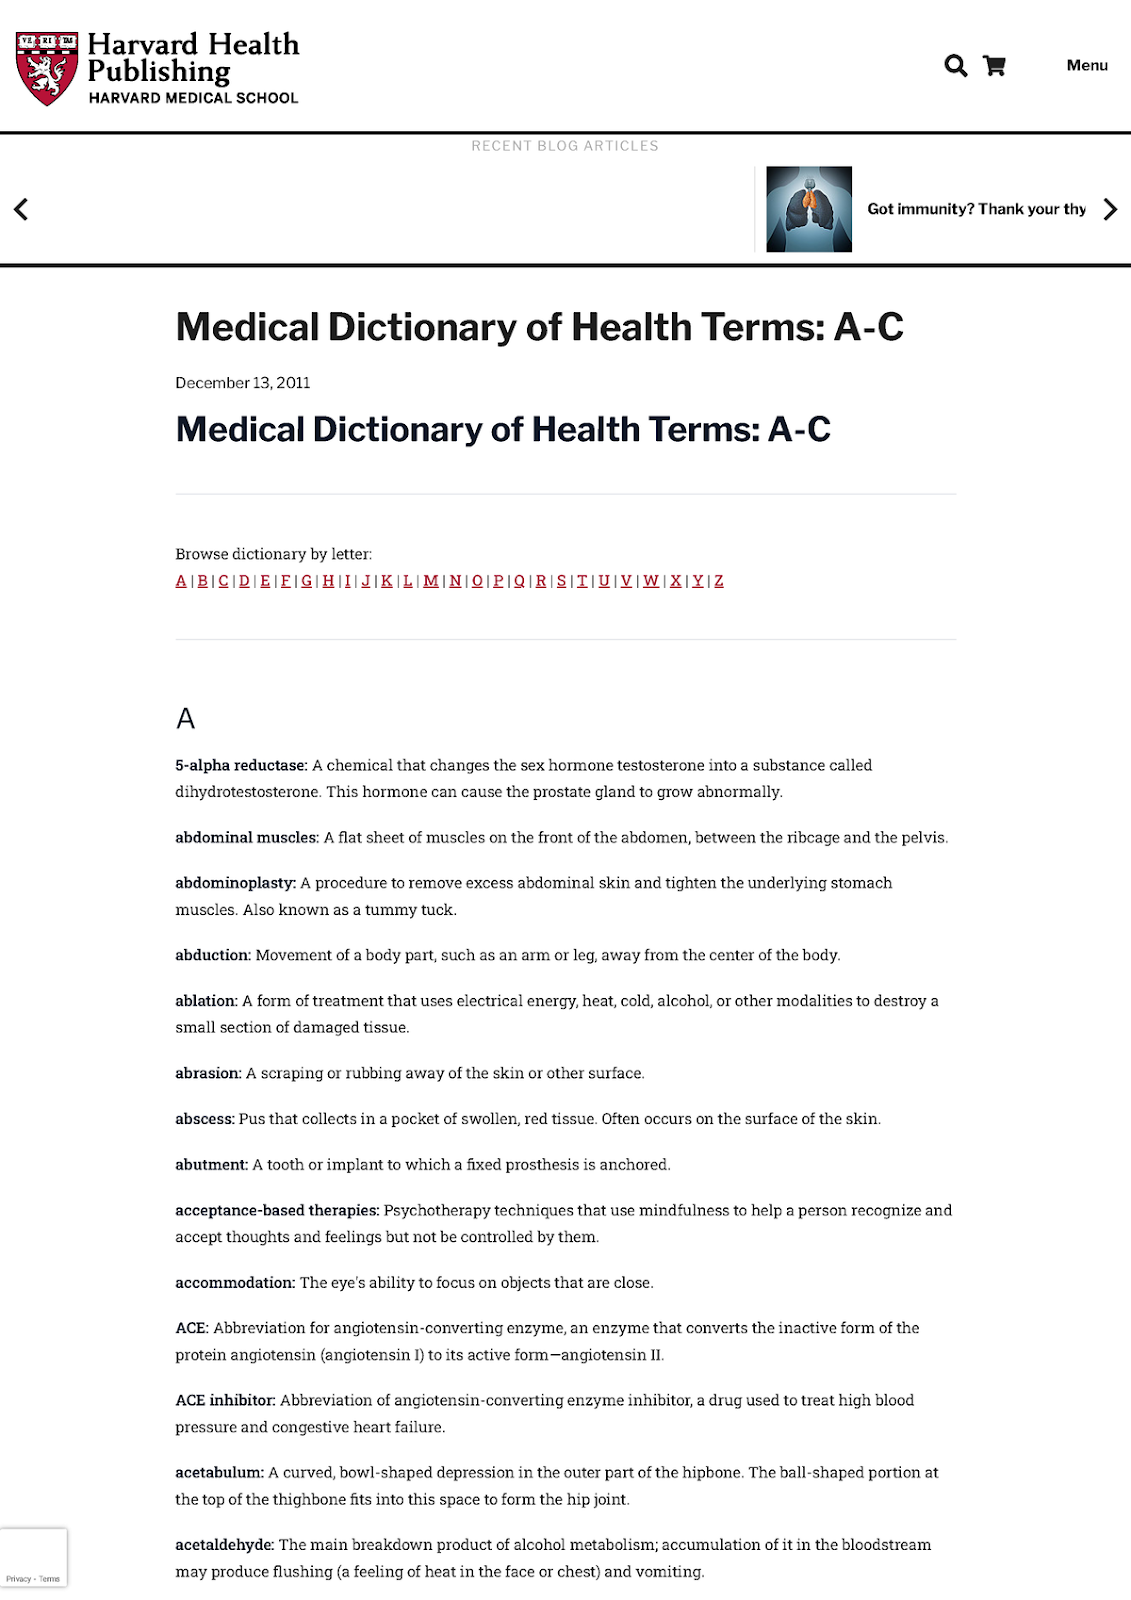 medical dictionary of health terms - tiếng anh chuyên ngành y